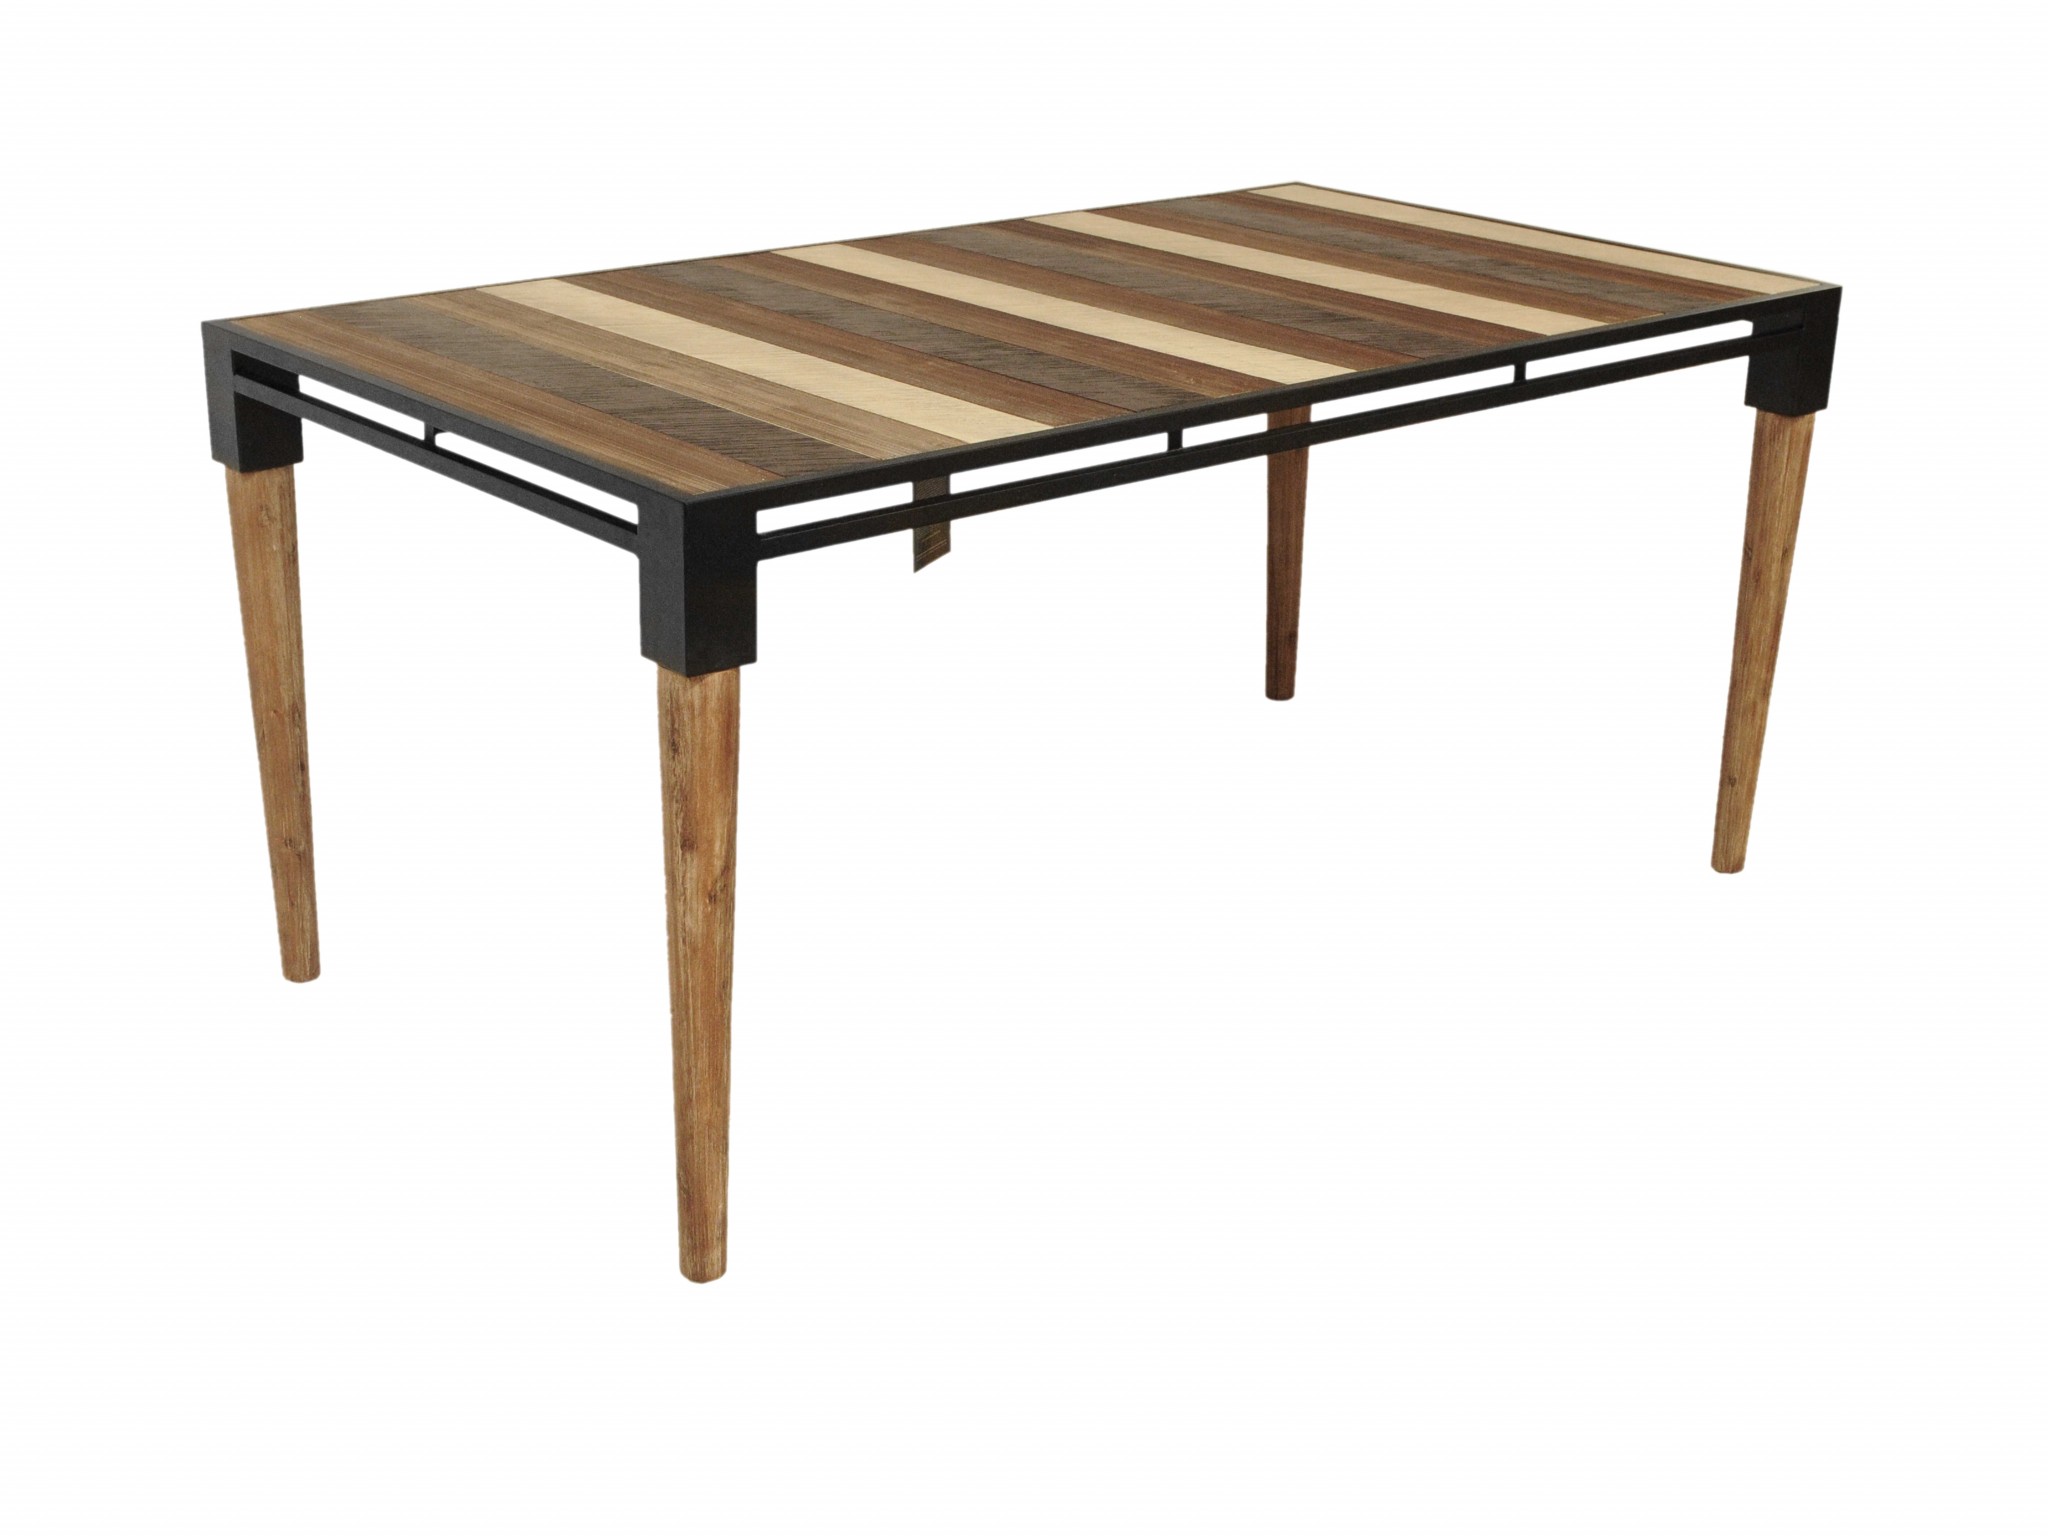 66" X 36" X 30" Metal Base Acacia Wood Dining Table